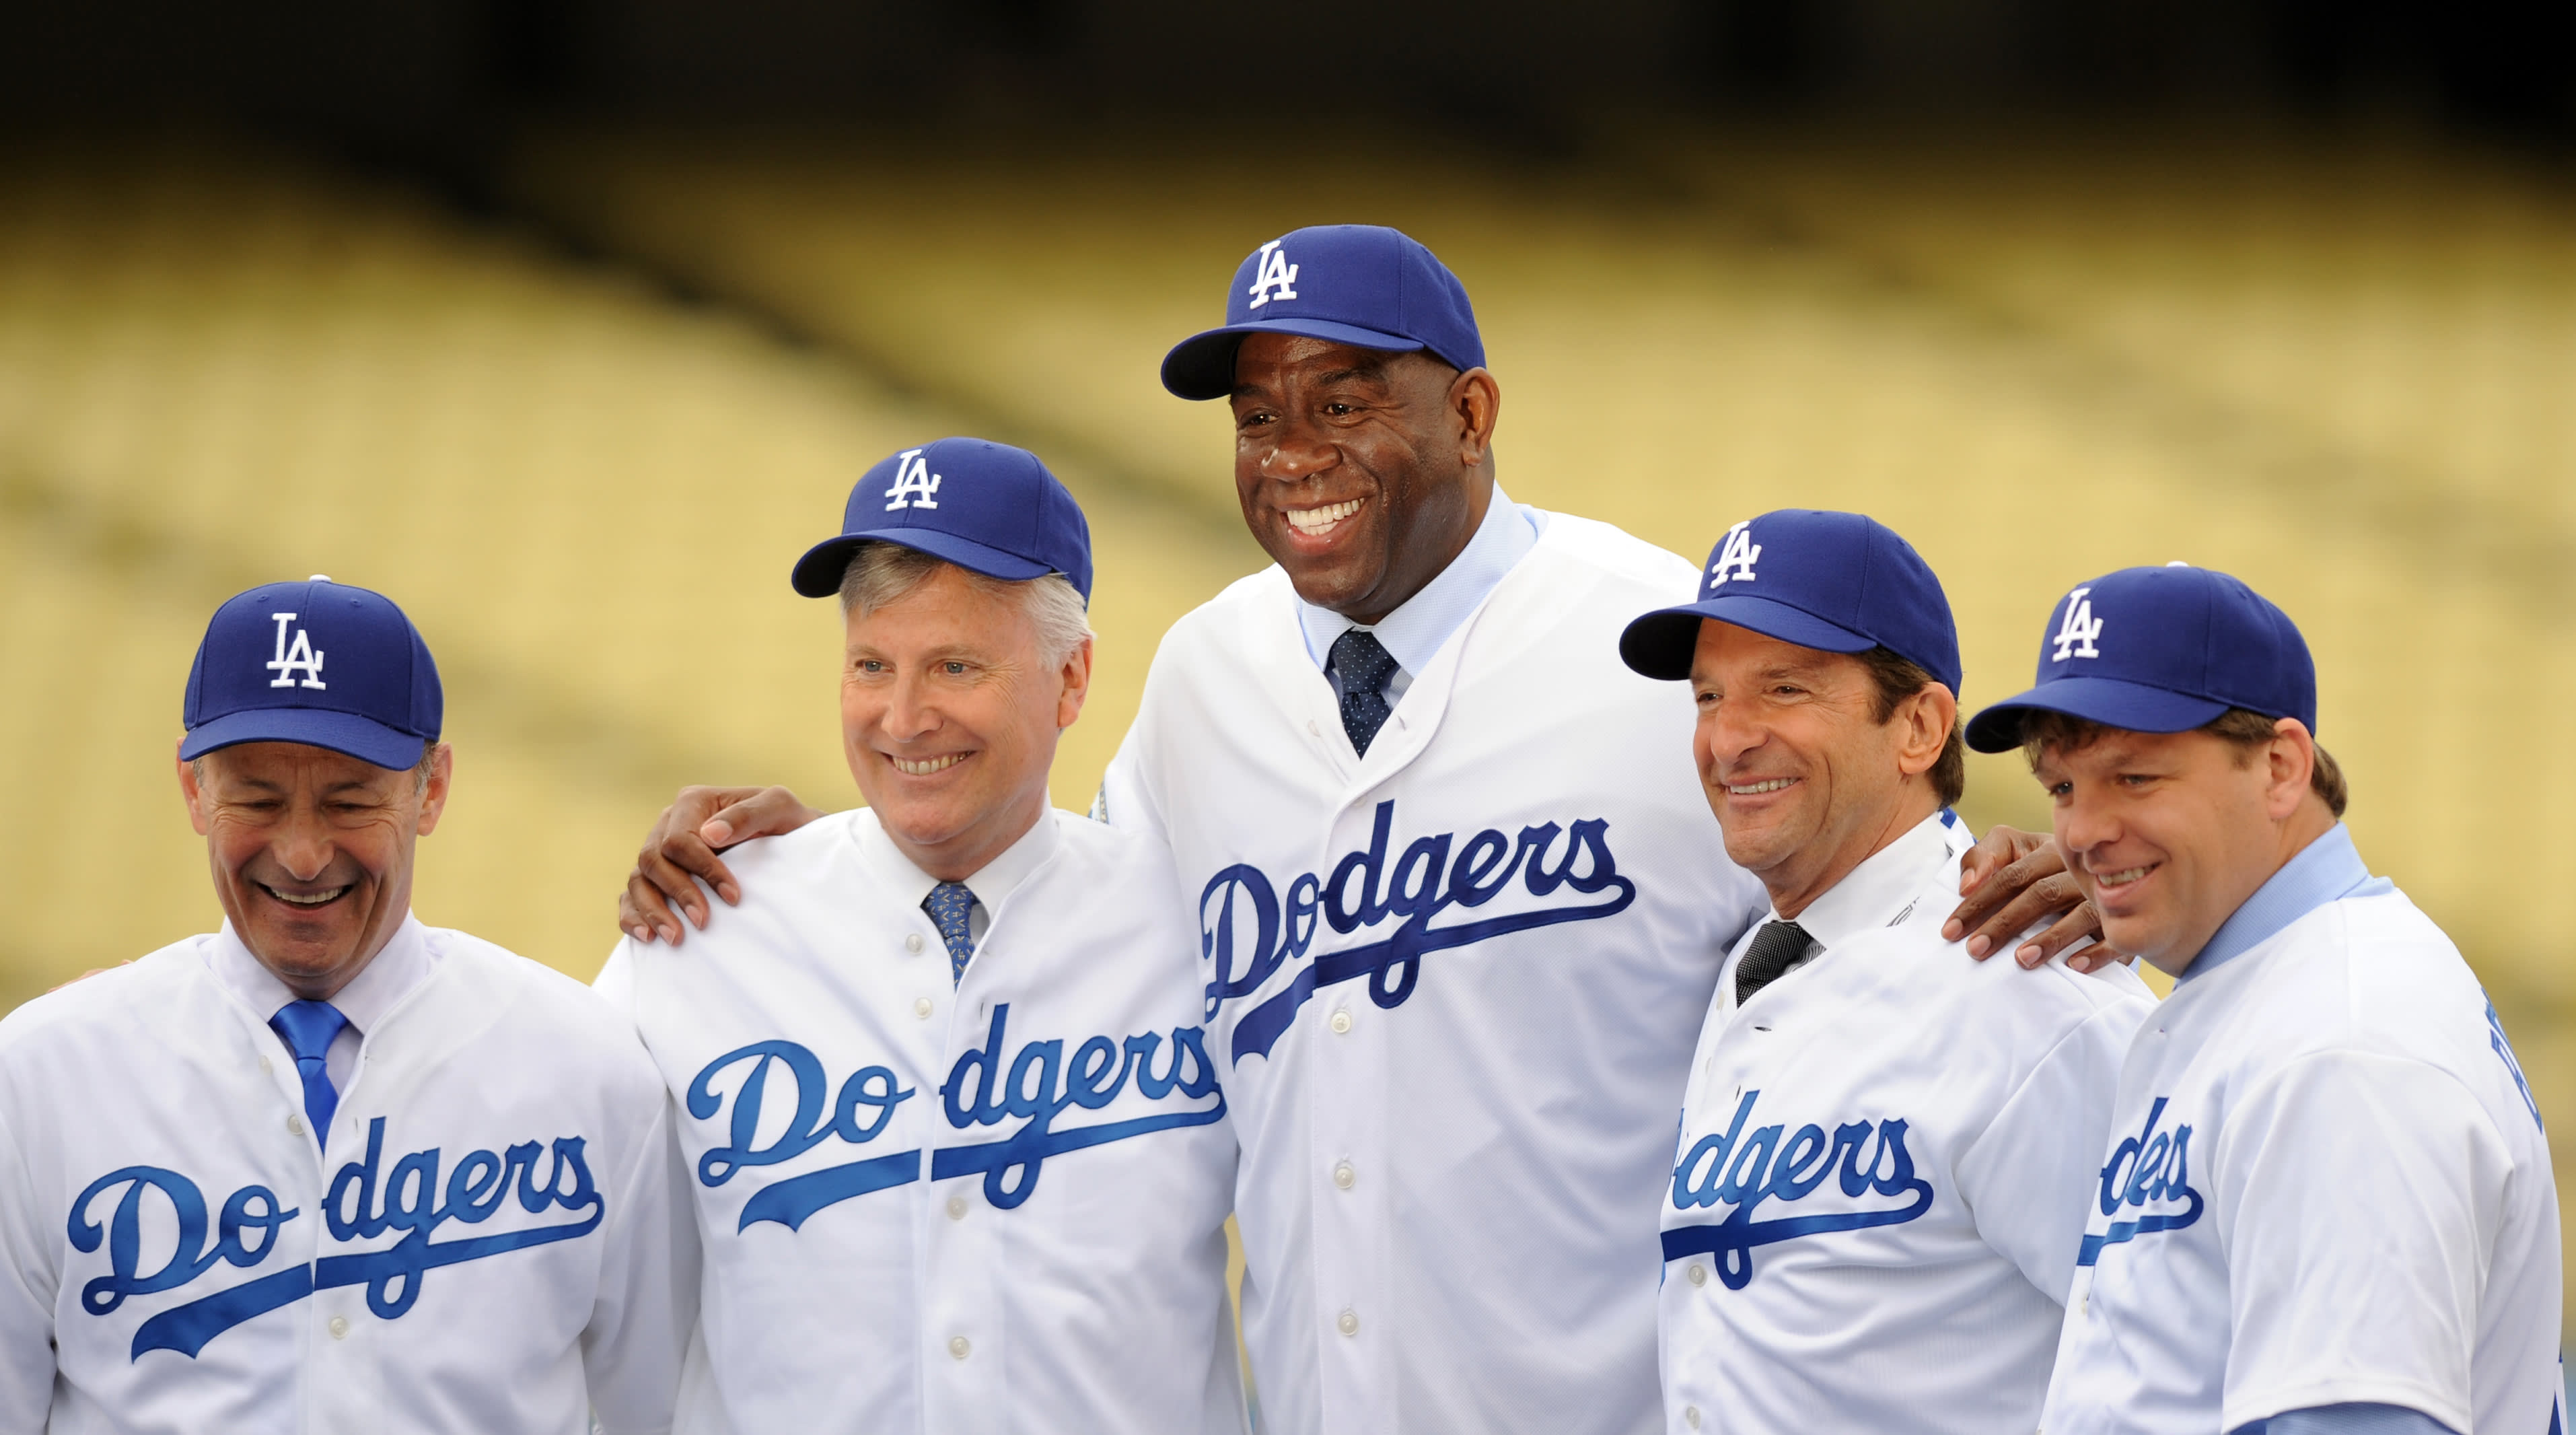 LA Dodgers linked to $20 billion plan to backstop big insurers: WSJ